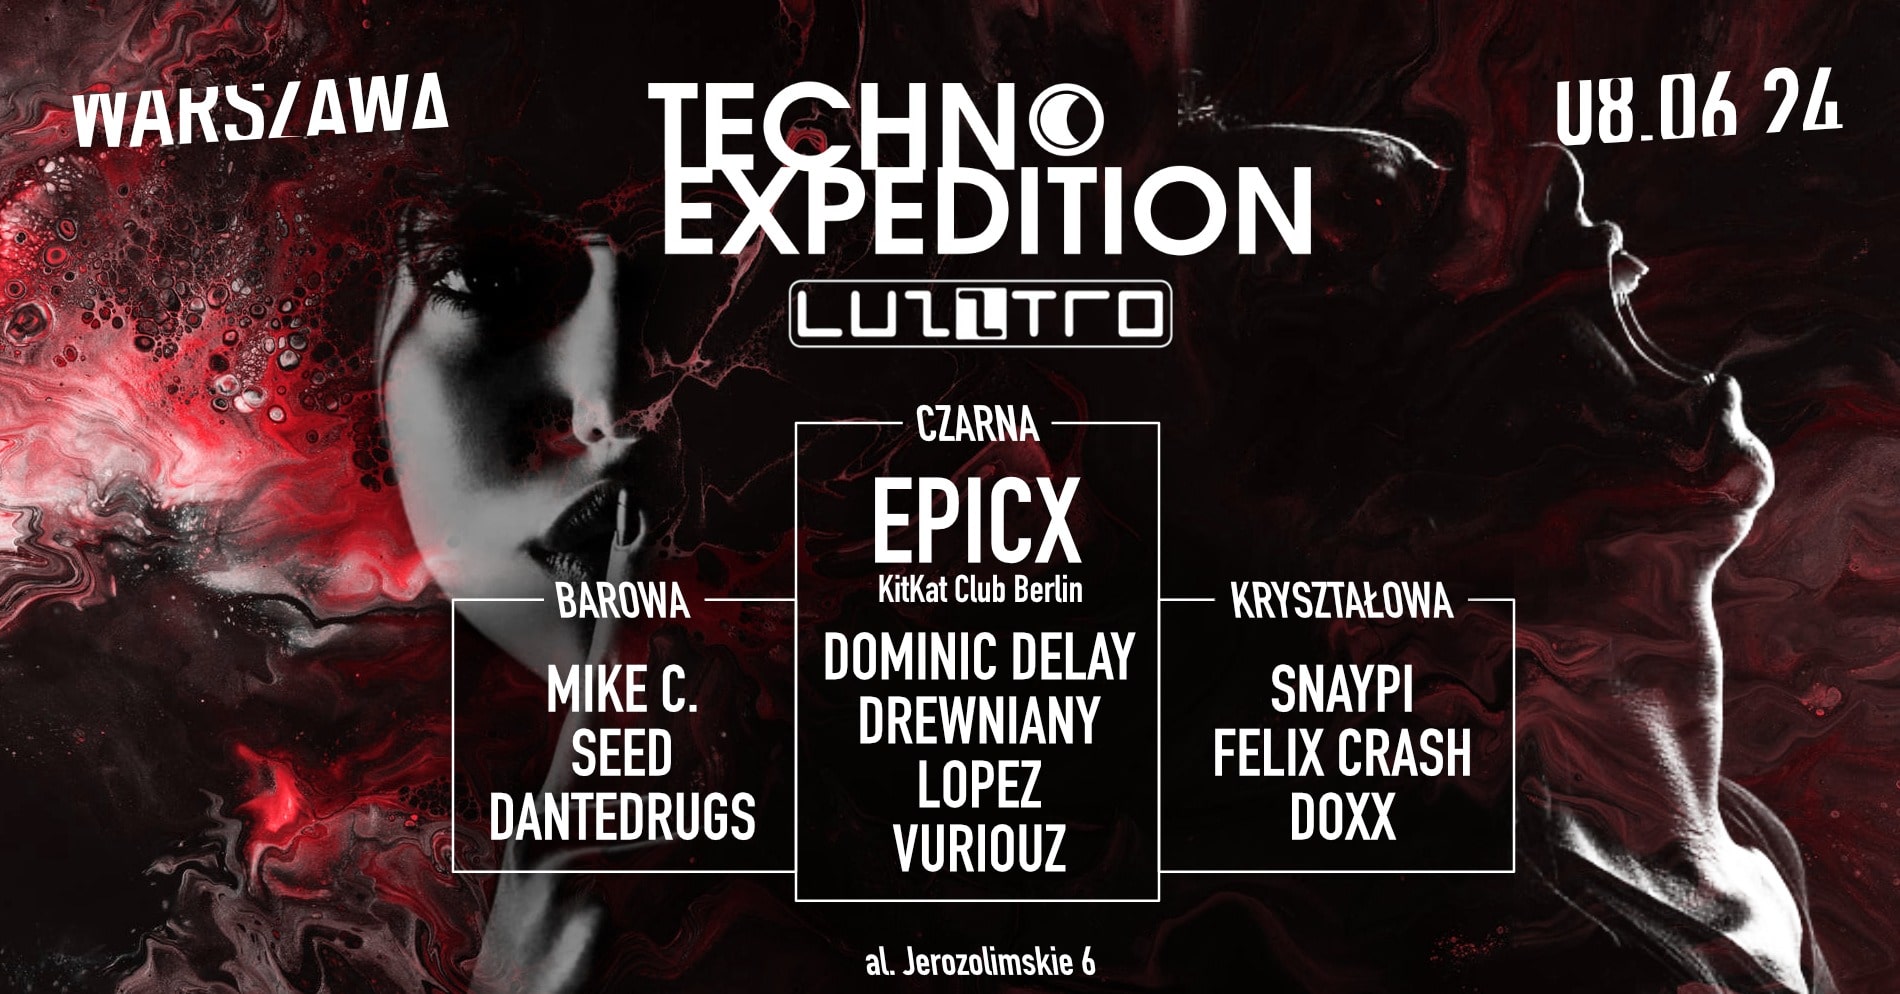 Techno Expedition w/ Epicx KitKat Club Berlin in Luzztro